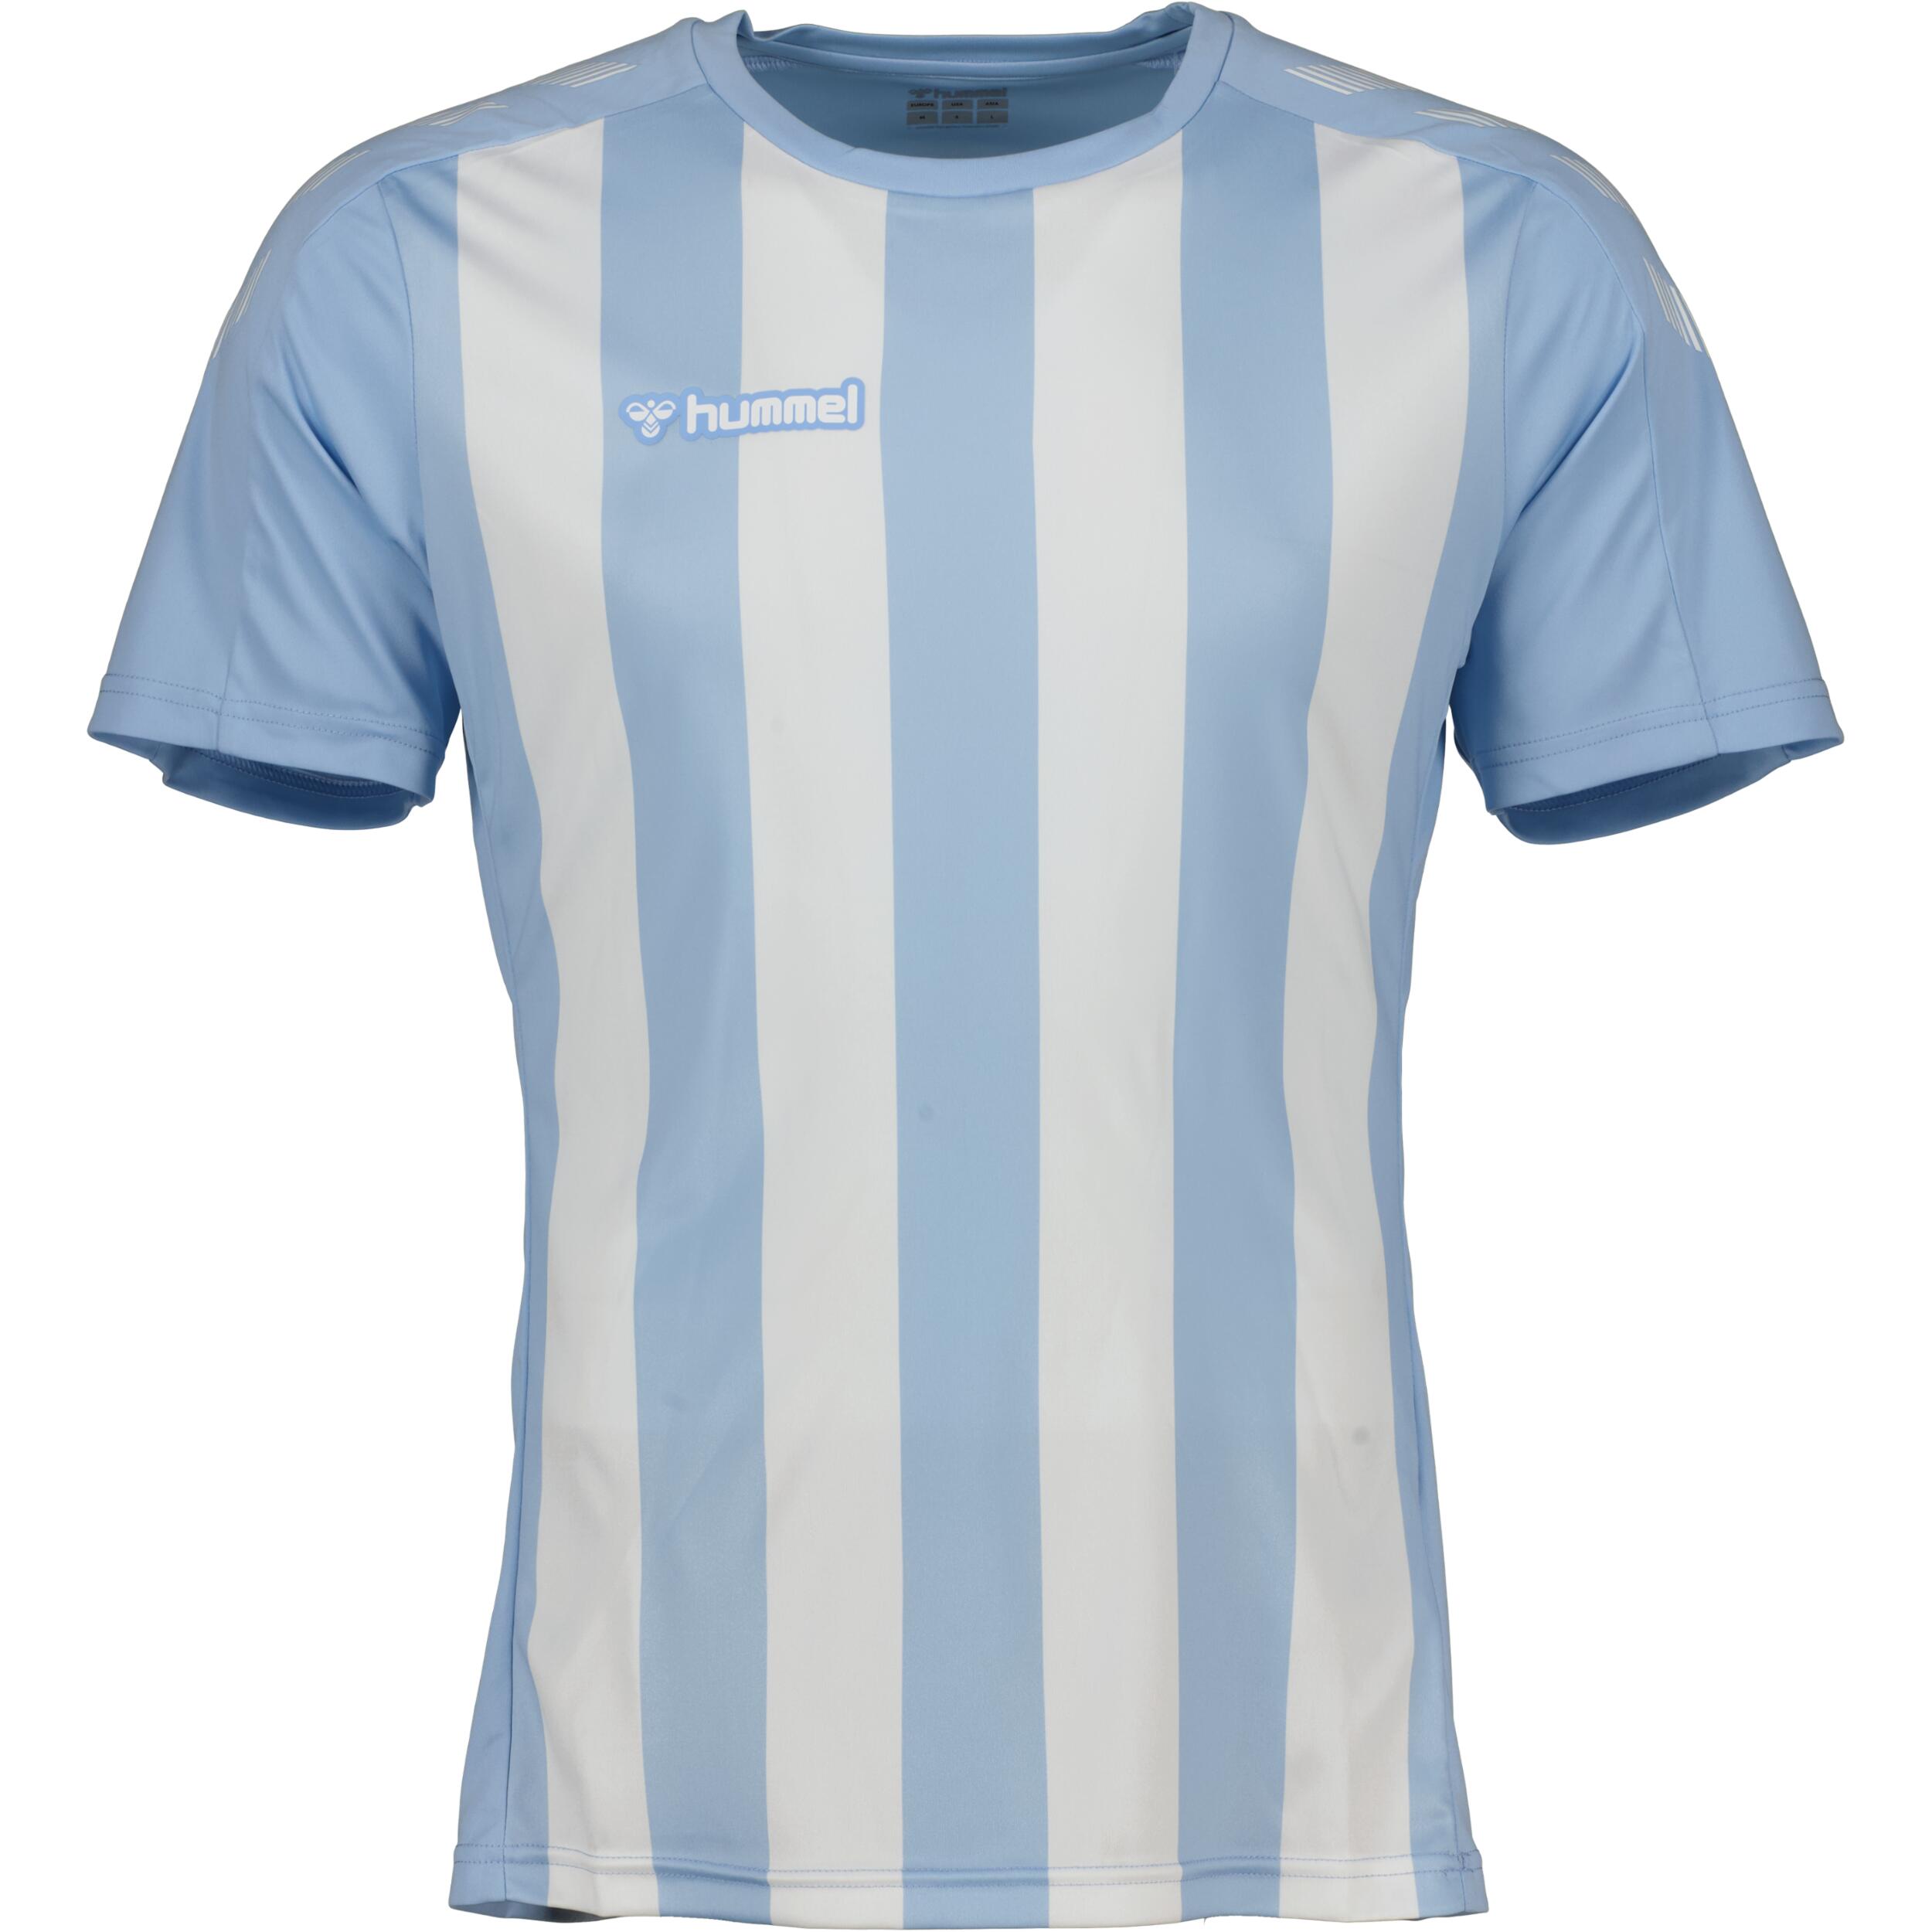 HUMMEL Stripe jersey for men, great for football, in argentina blue/white